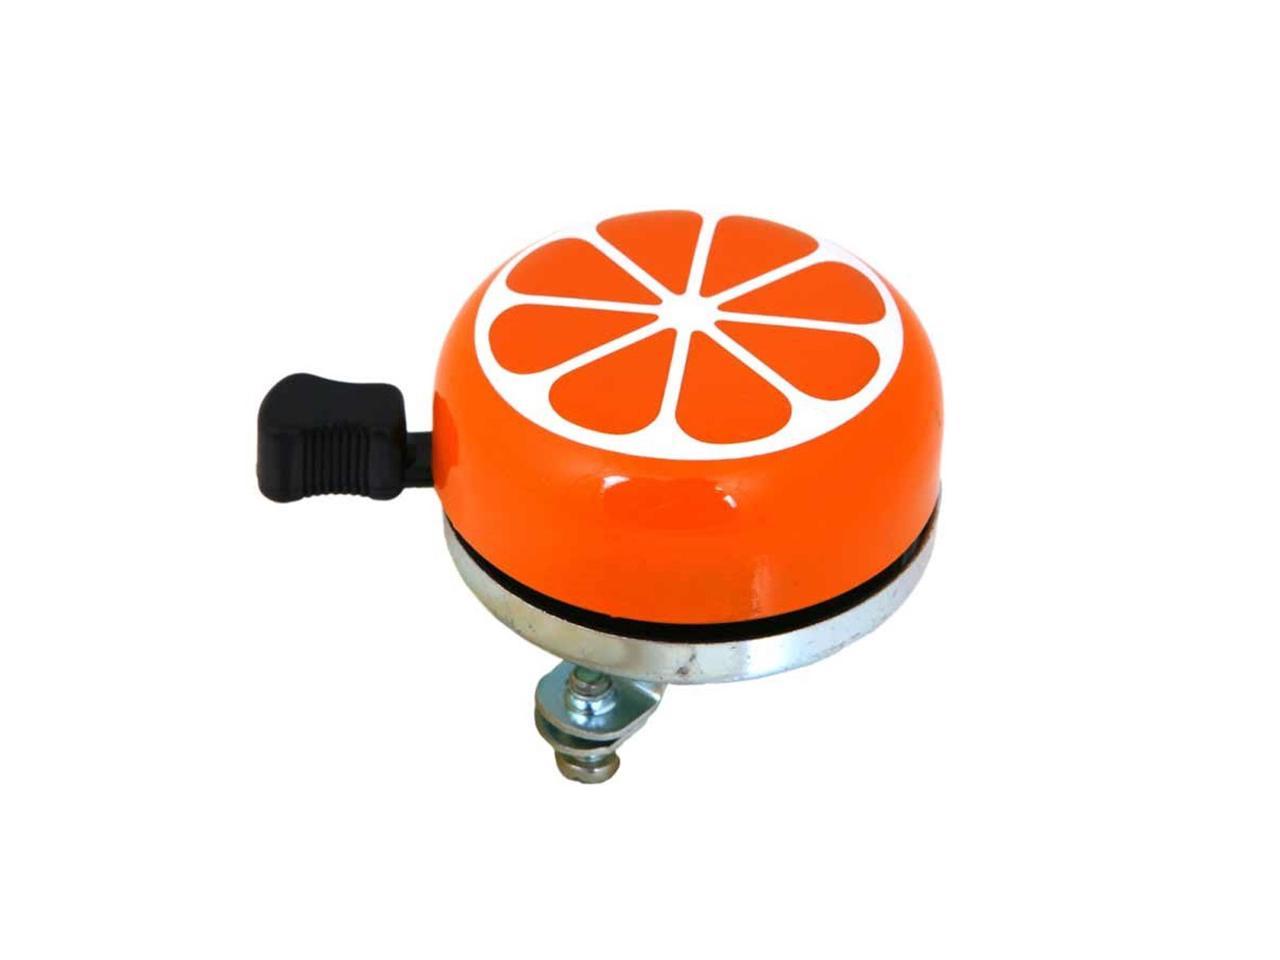 orange bike bell